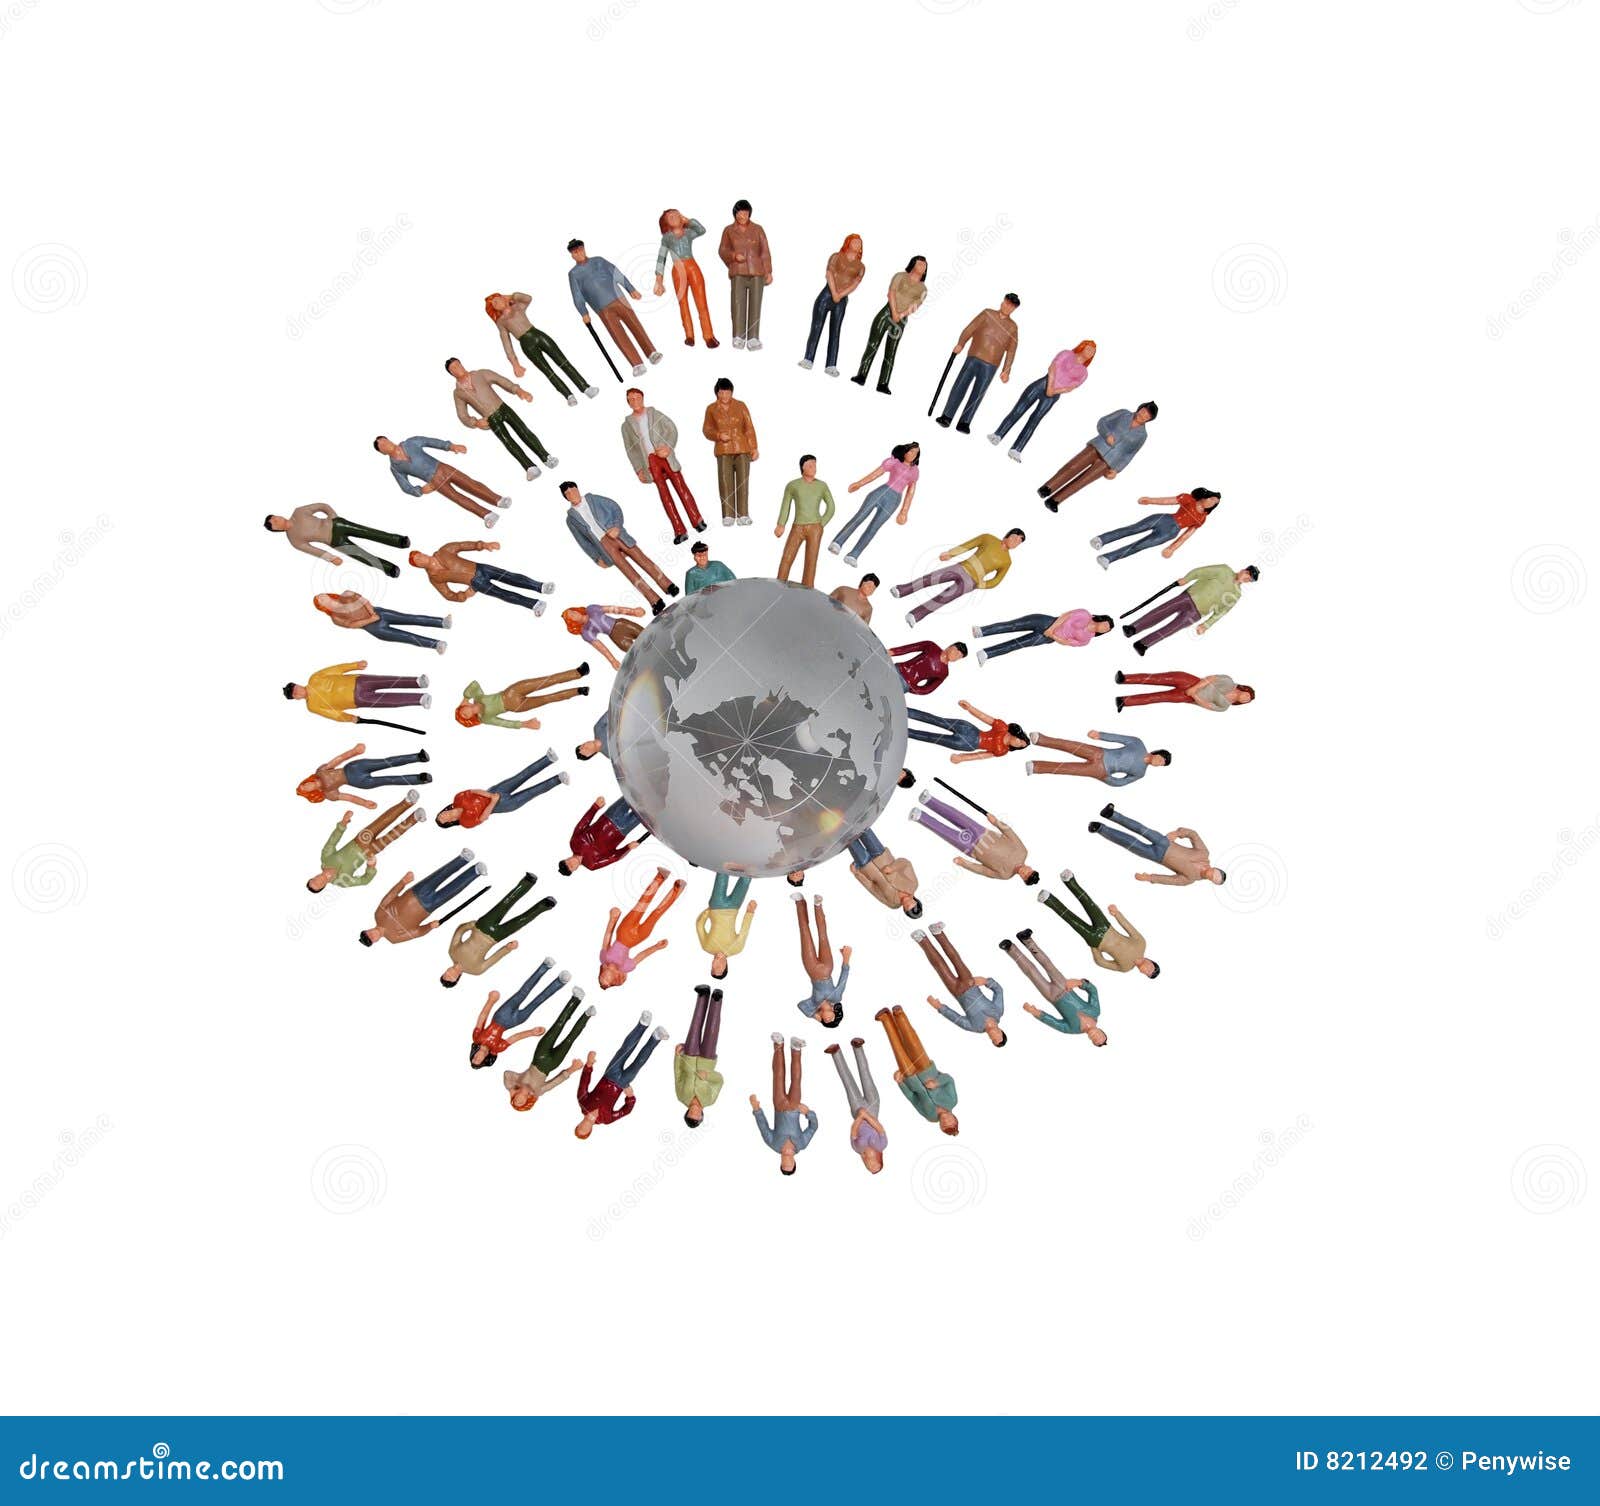 people representing humanity around the world